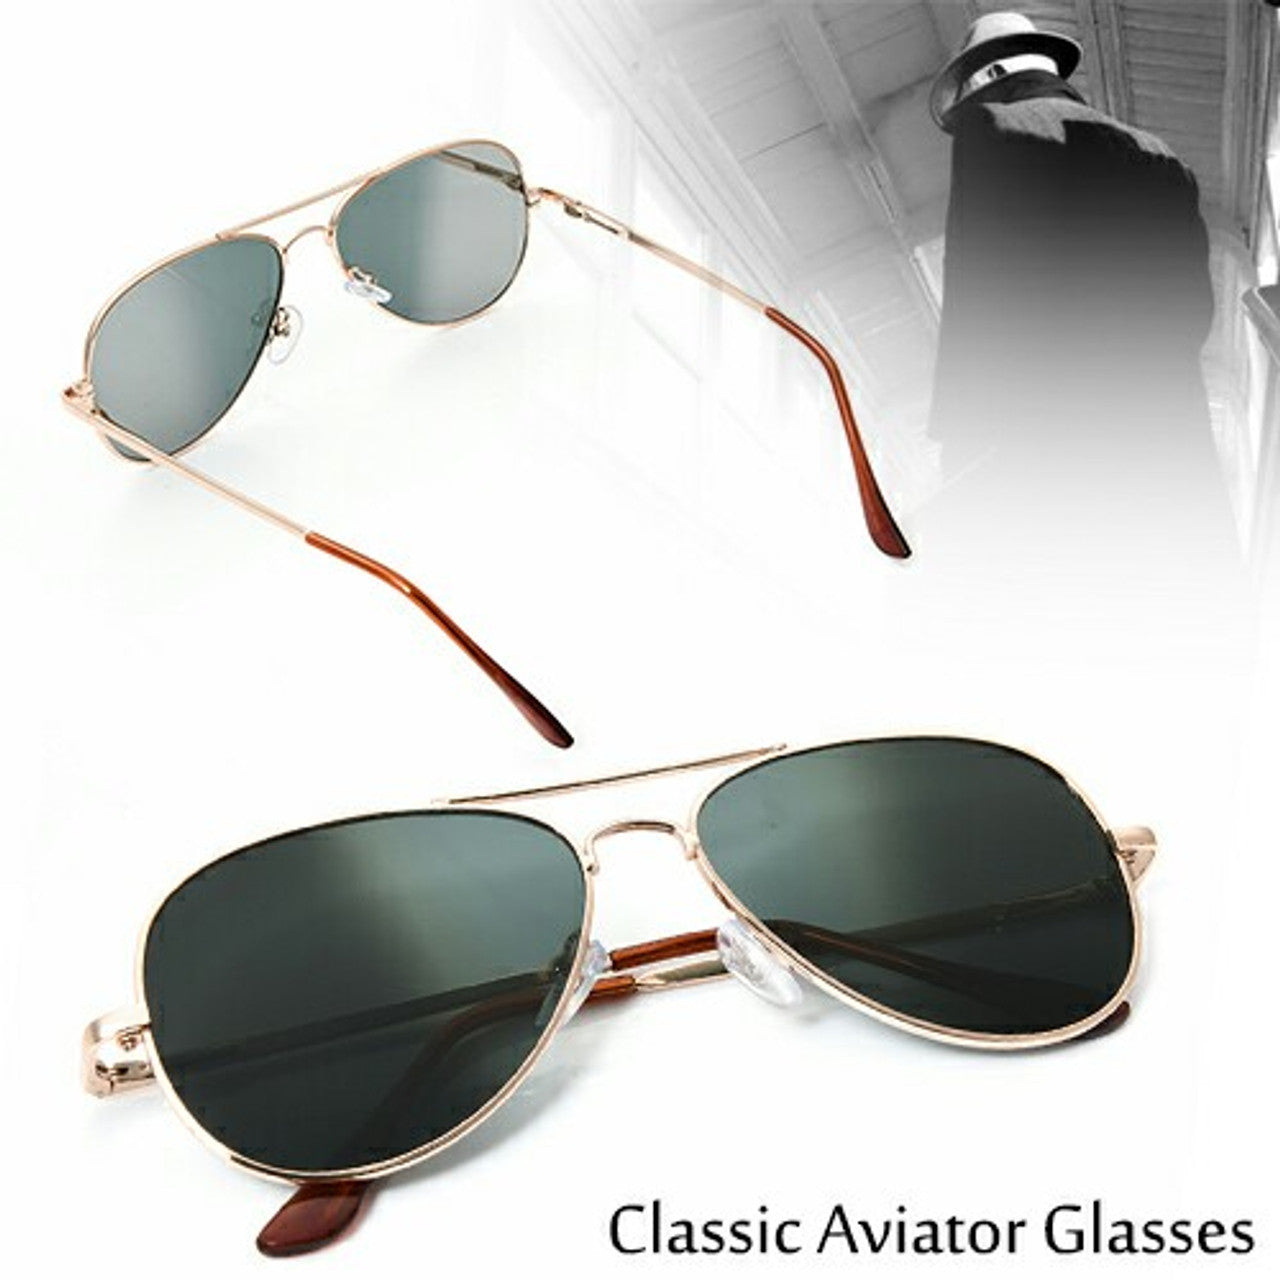 Adult Rearview Aviator Glasses (Unisex)